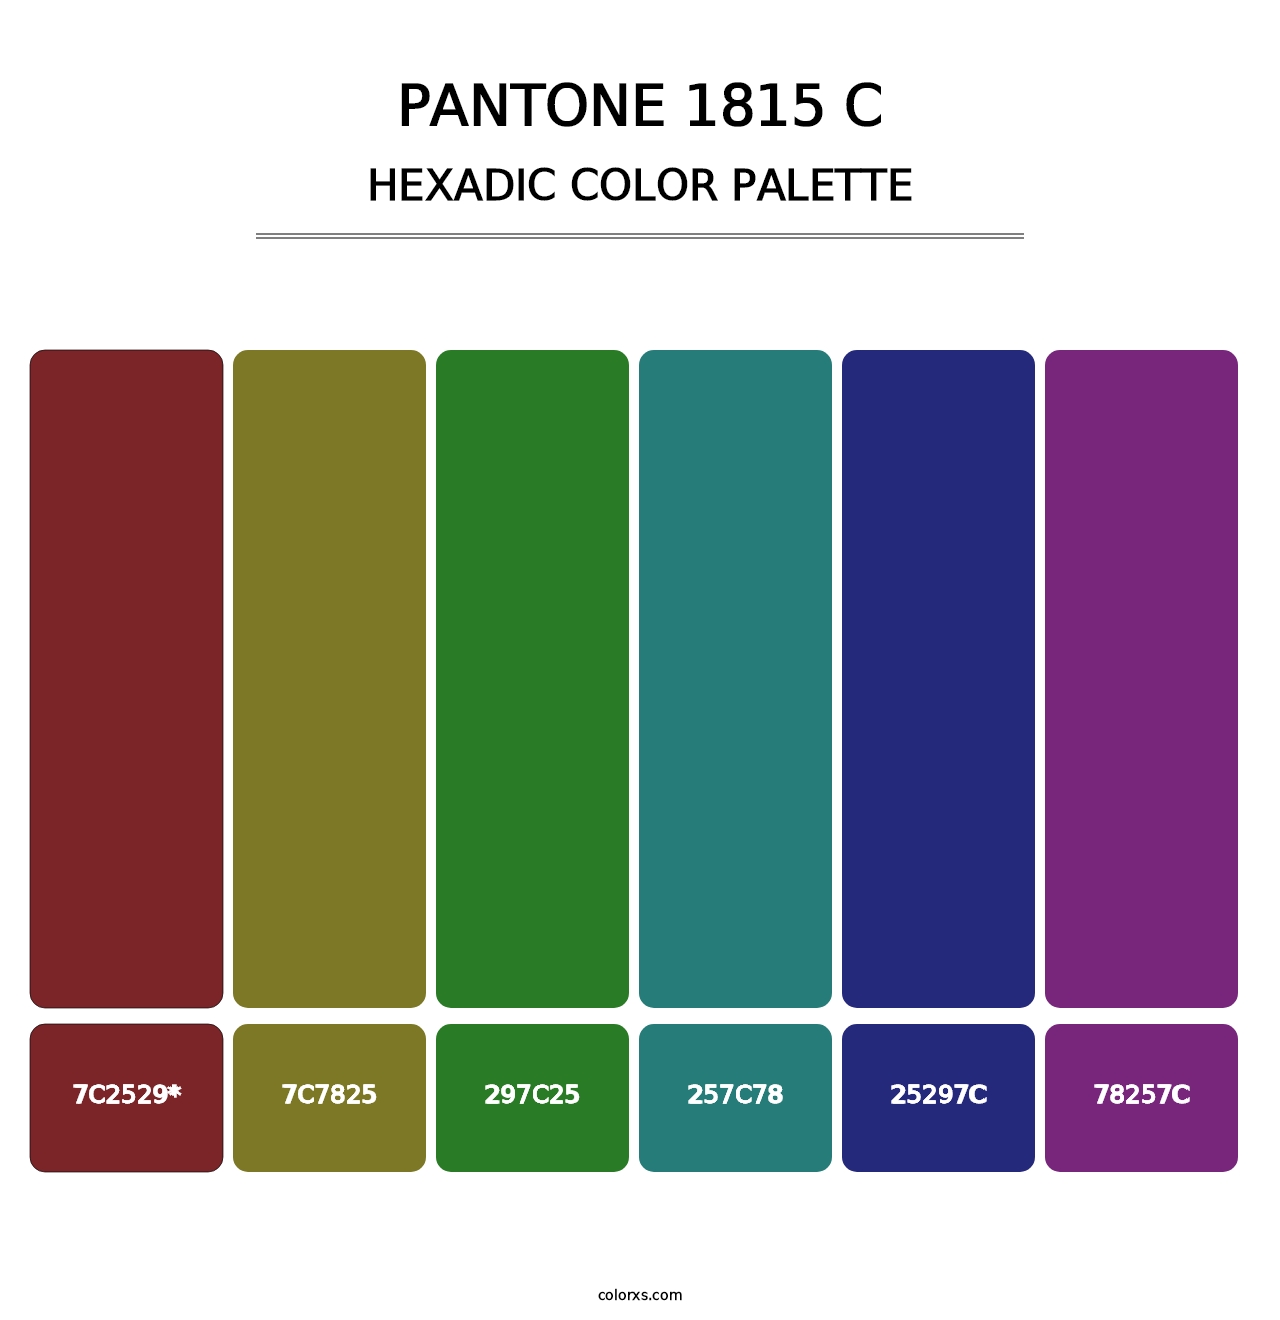 PANTONE 1815 C - Hexadic Color Palette